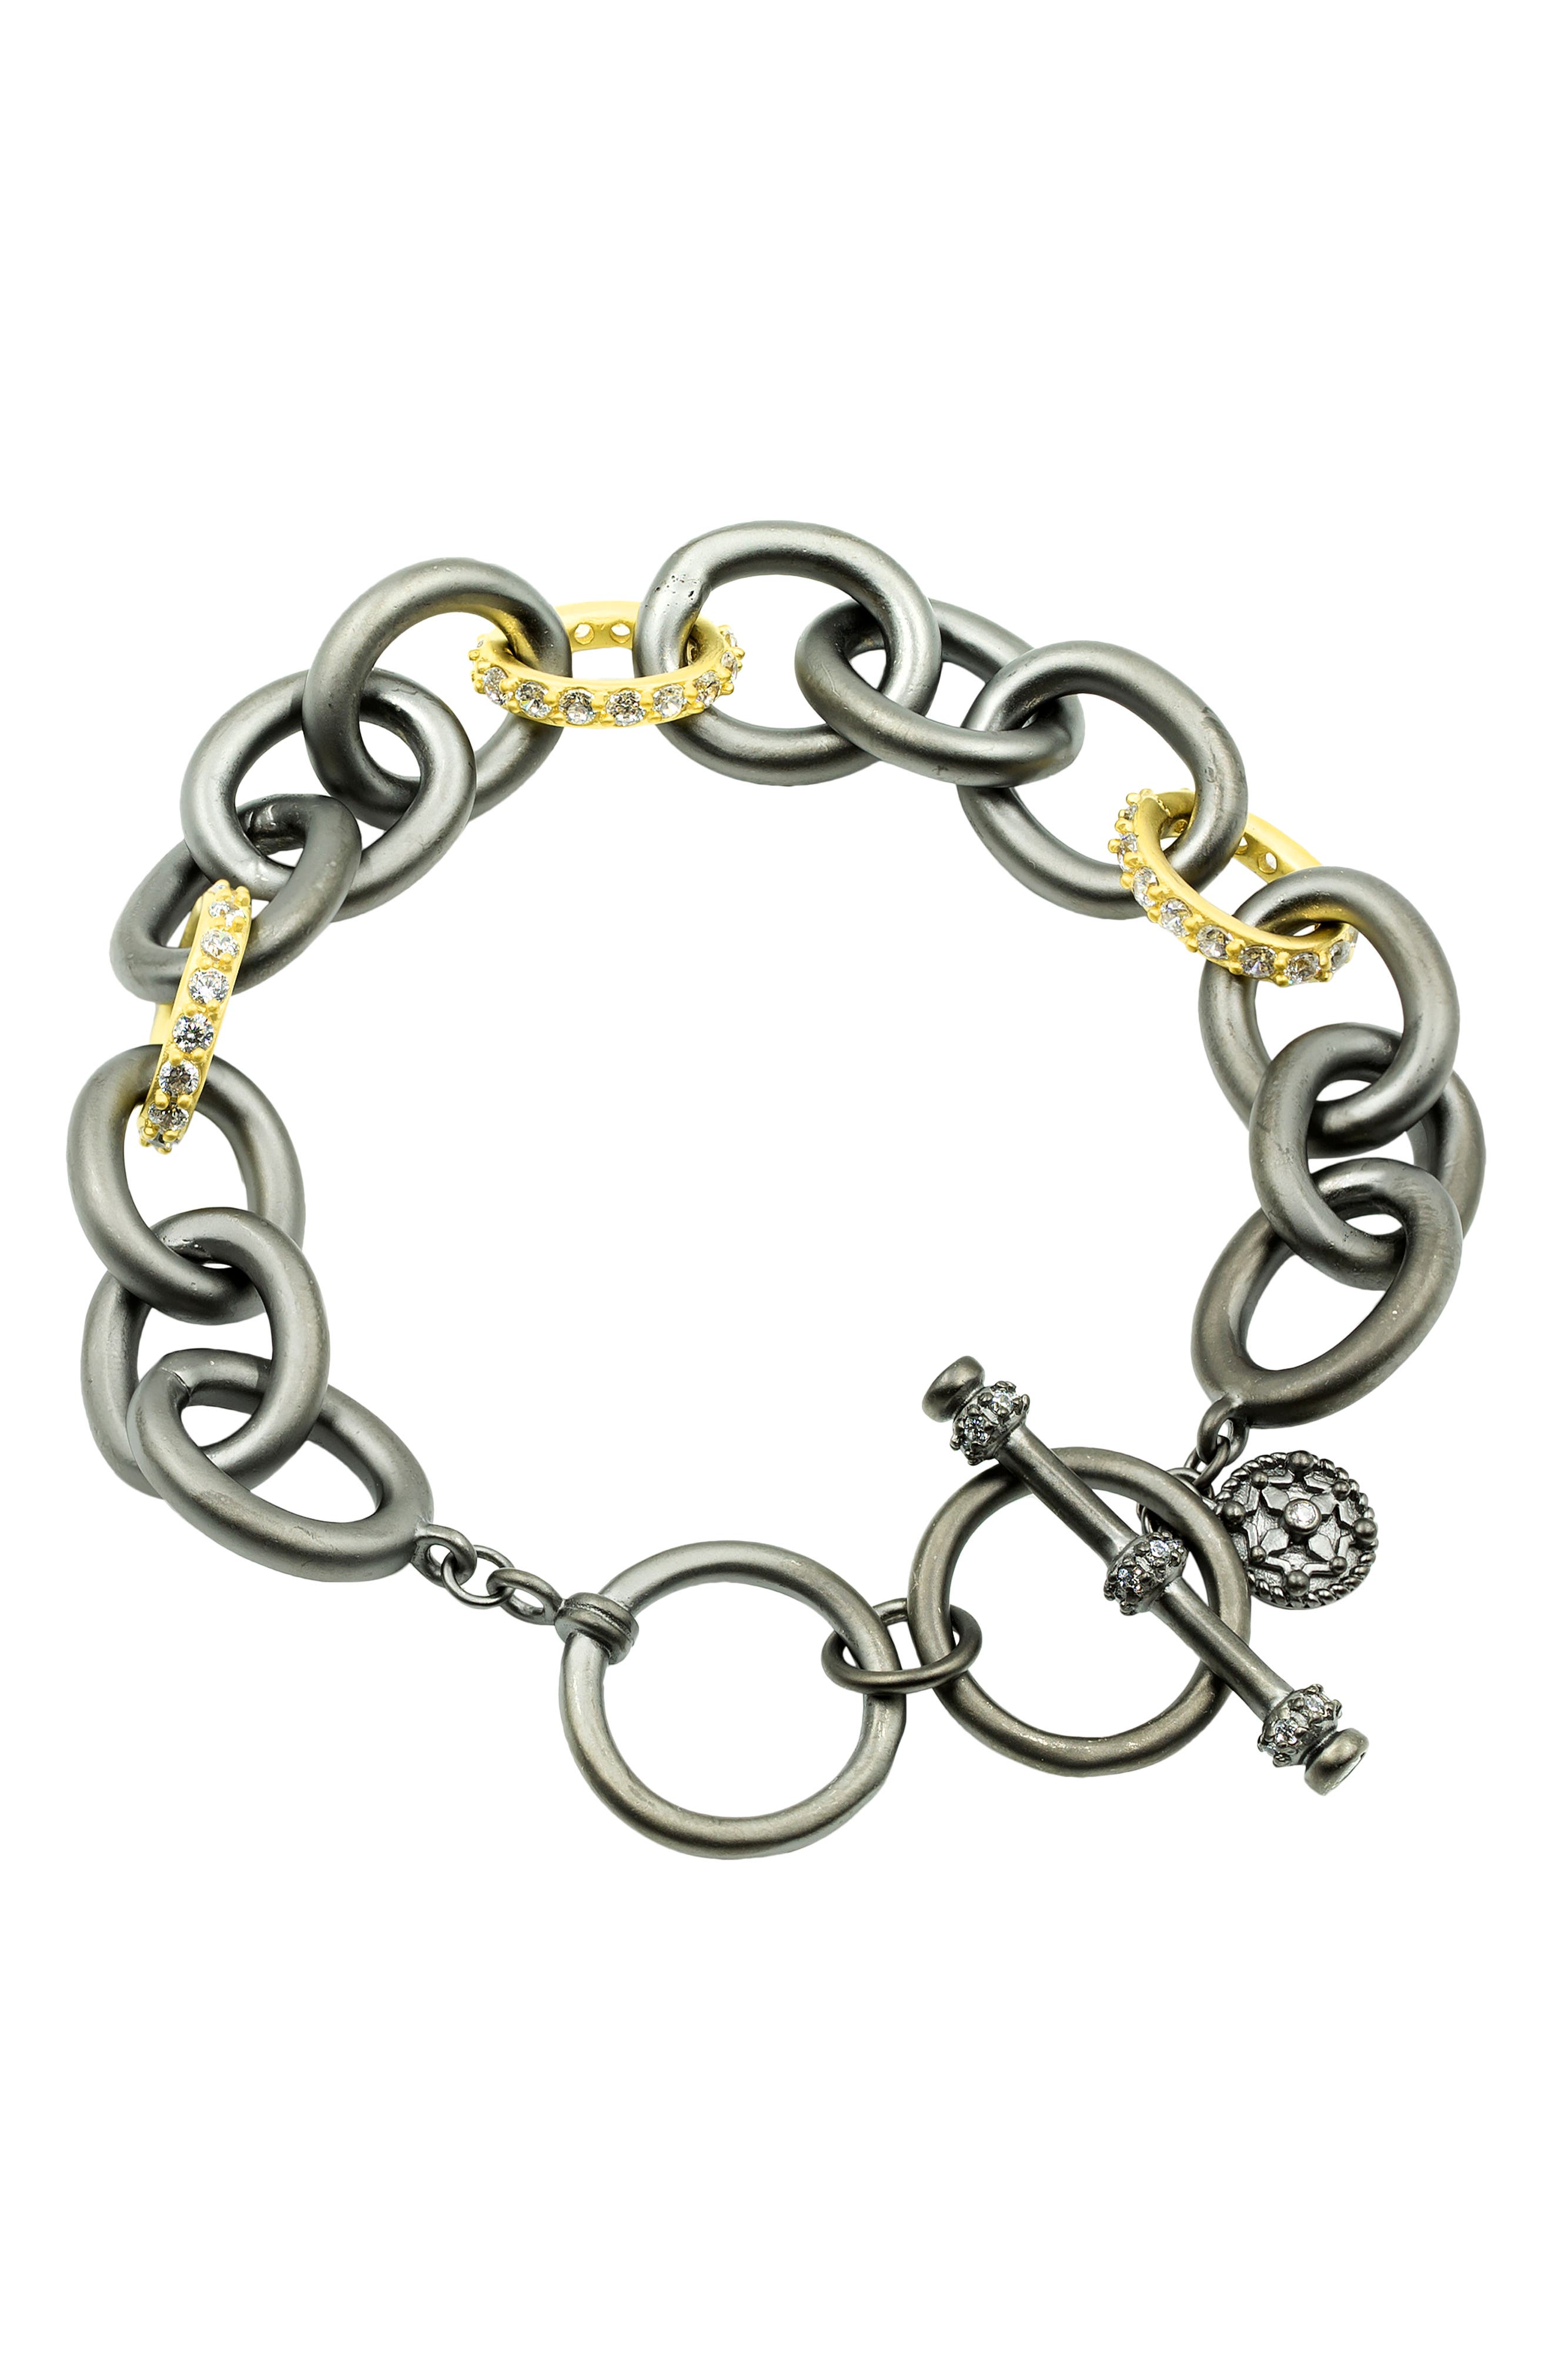 FREIDA ROTHMAN Heavy Alternating Link Toggle Bracelet in Gold/Black at Nordstrom -  YRZ070129B-1